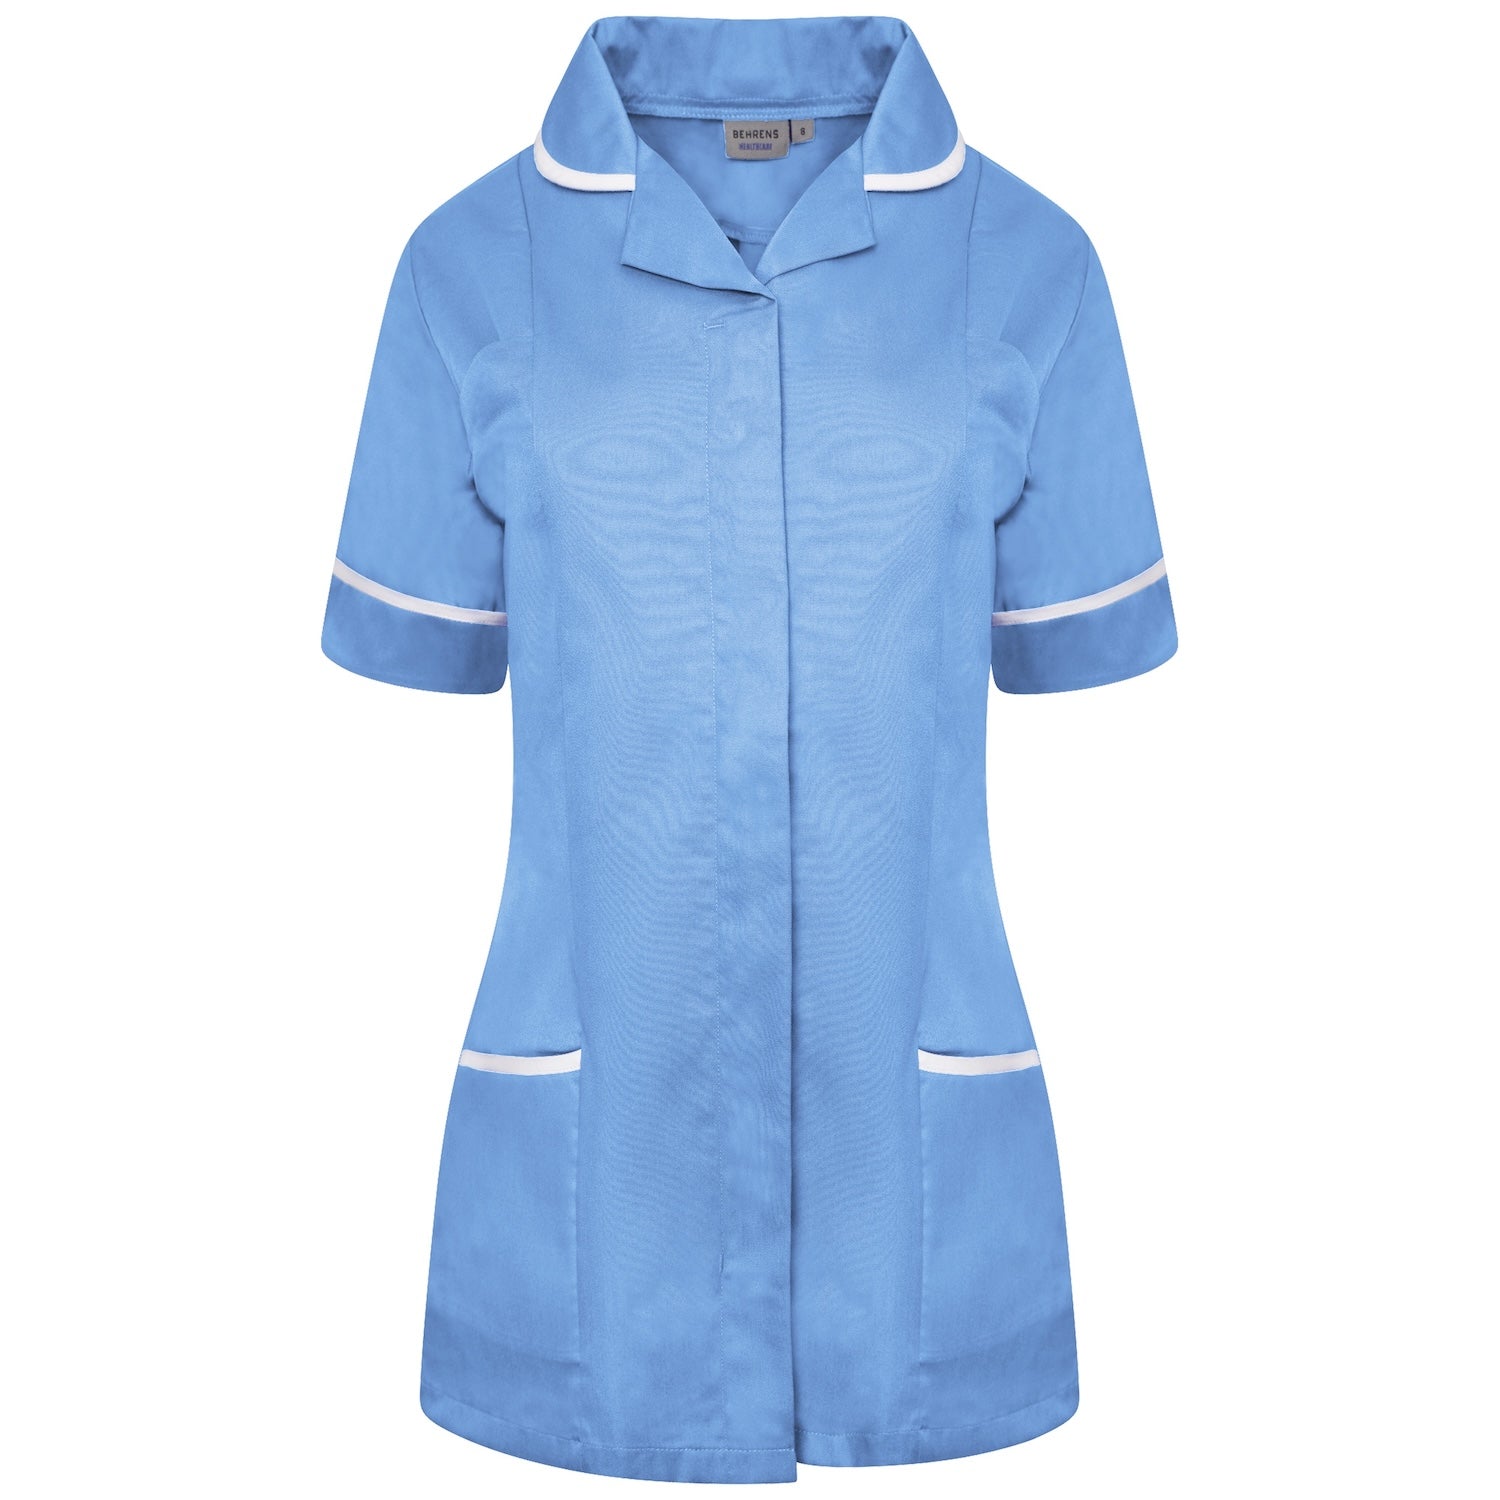 Ladies Healthcare Tunic | Round Collar | Hospital Blue/White Trim